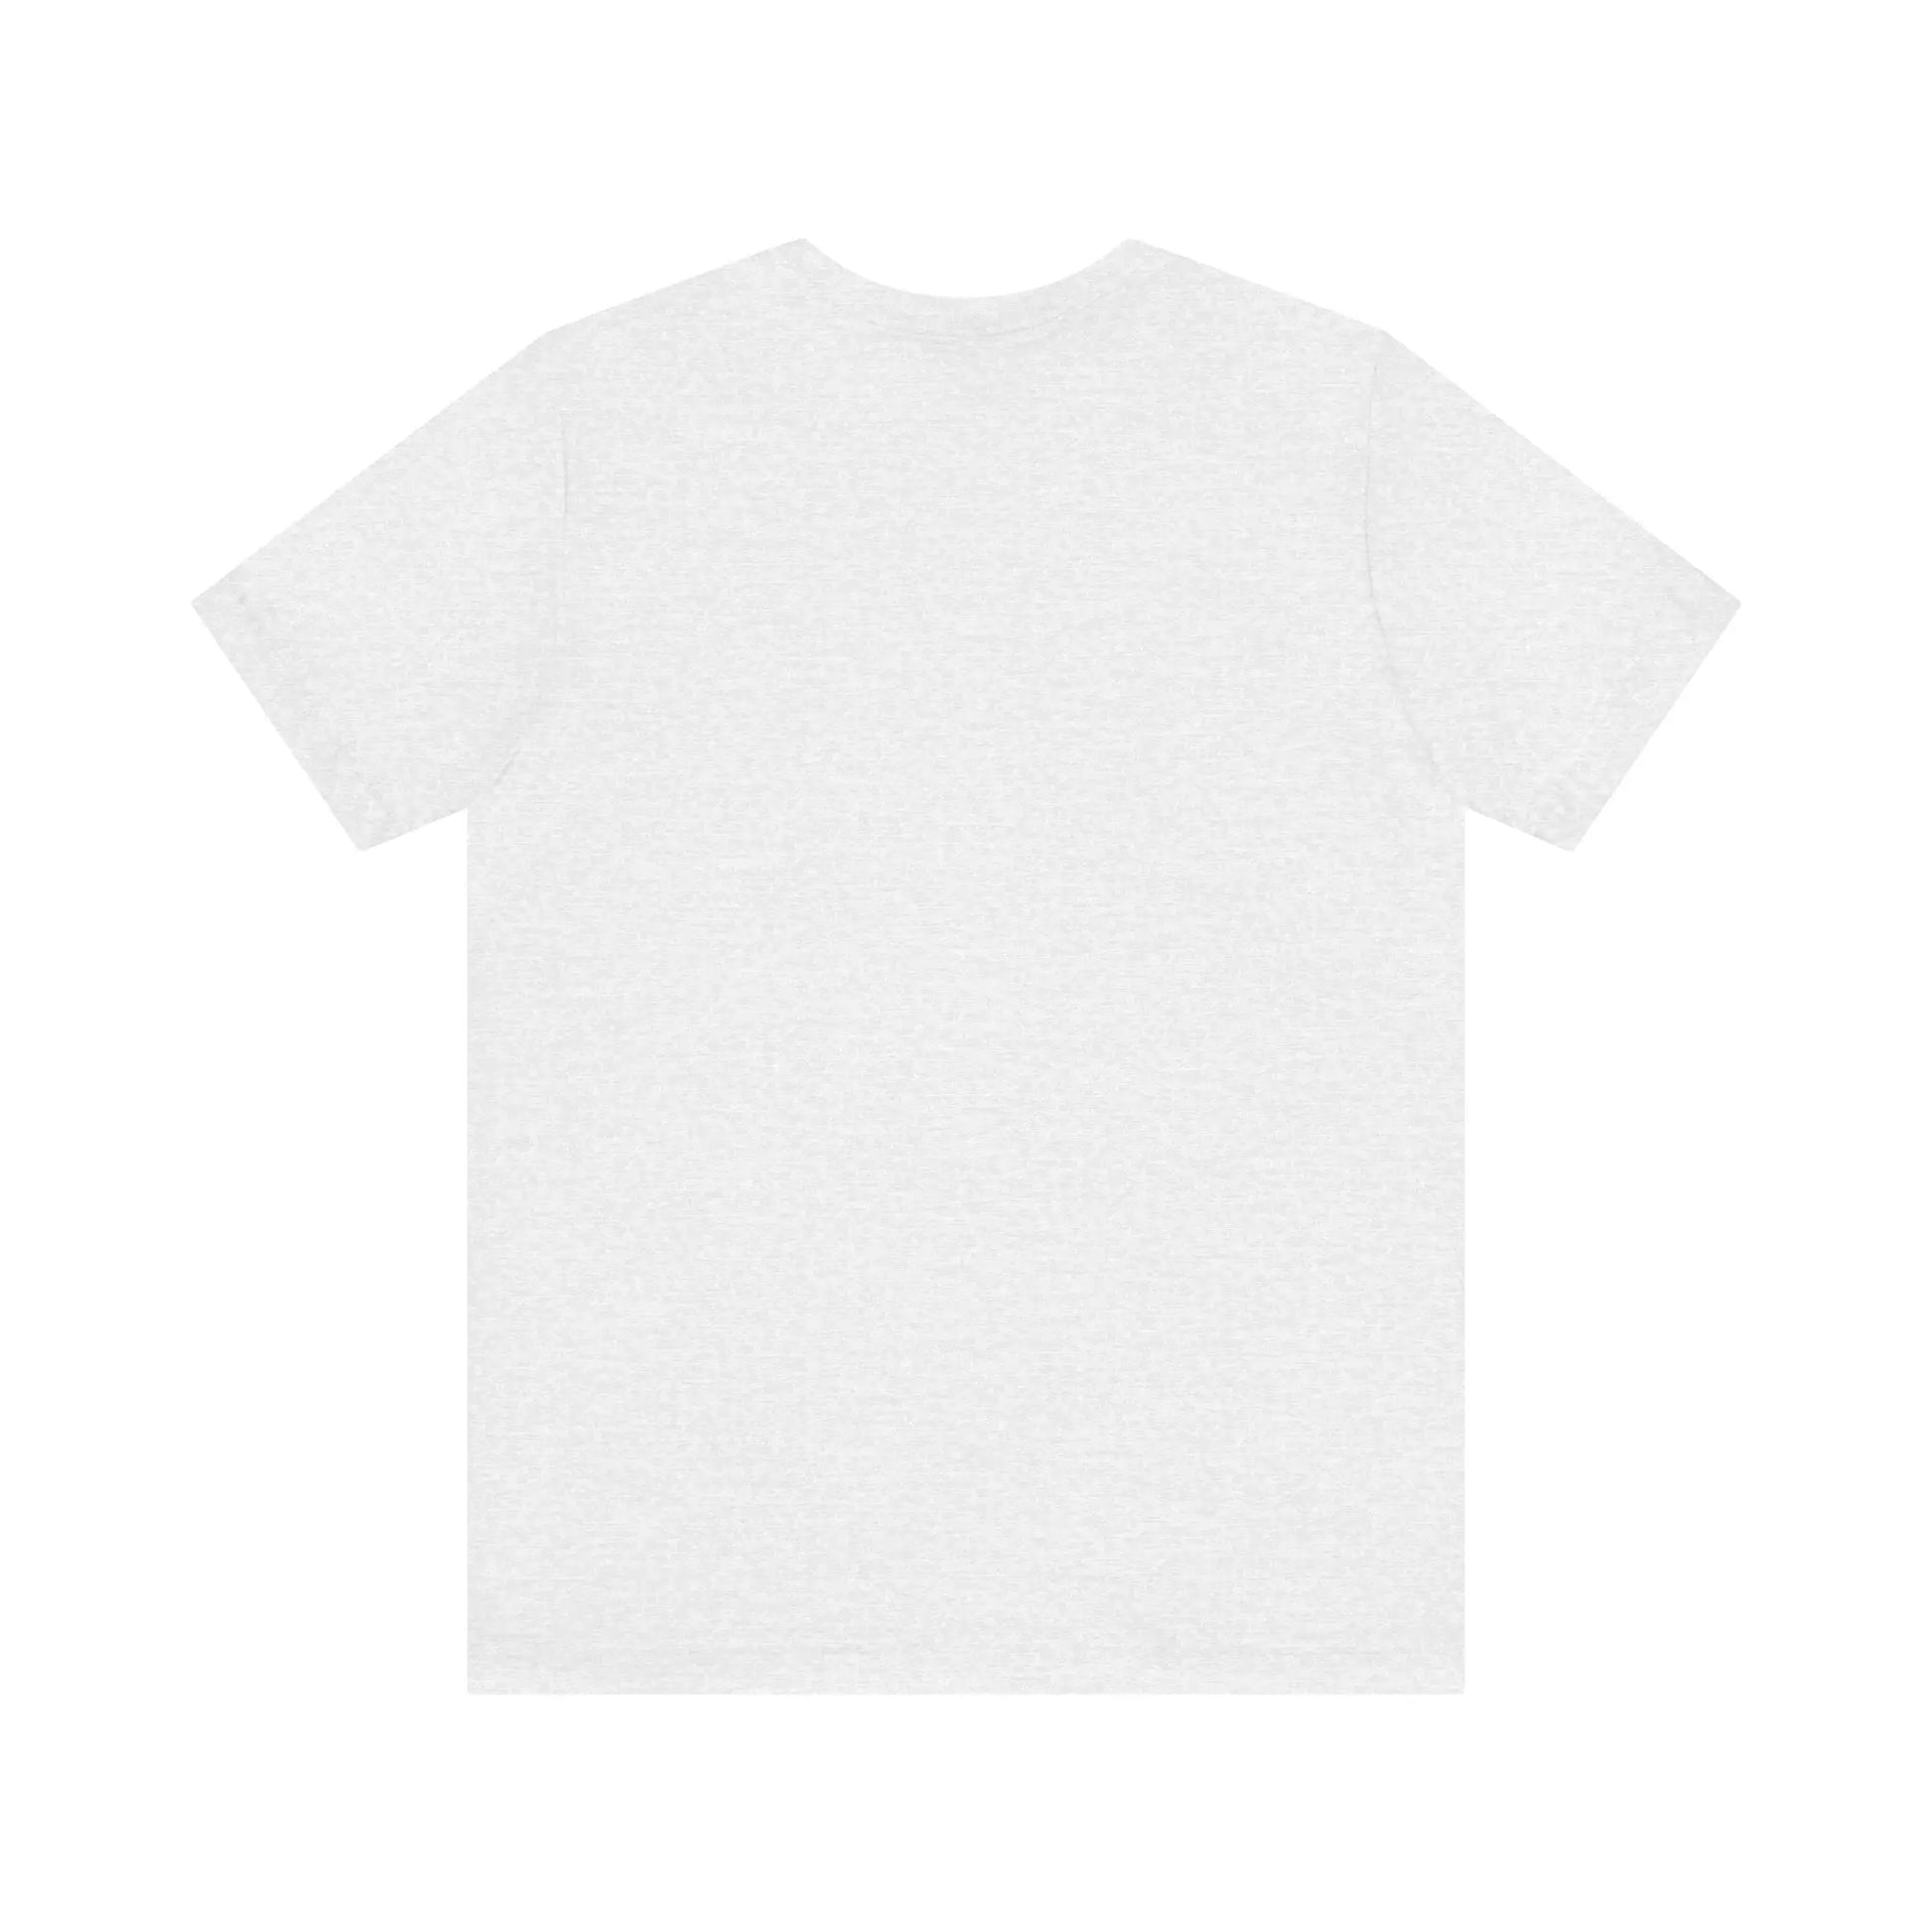 Be Real T-Shirt Printify Pikolelie (pee-koh-lay-lee) Activewear T-Shirt